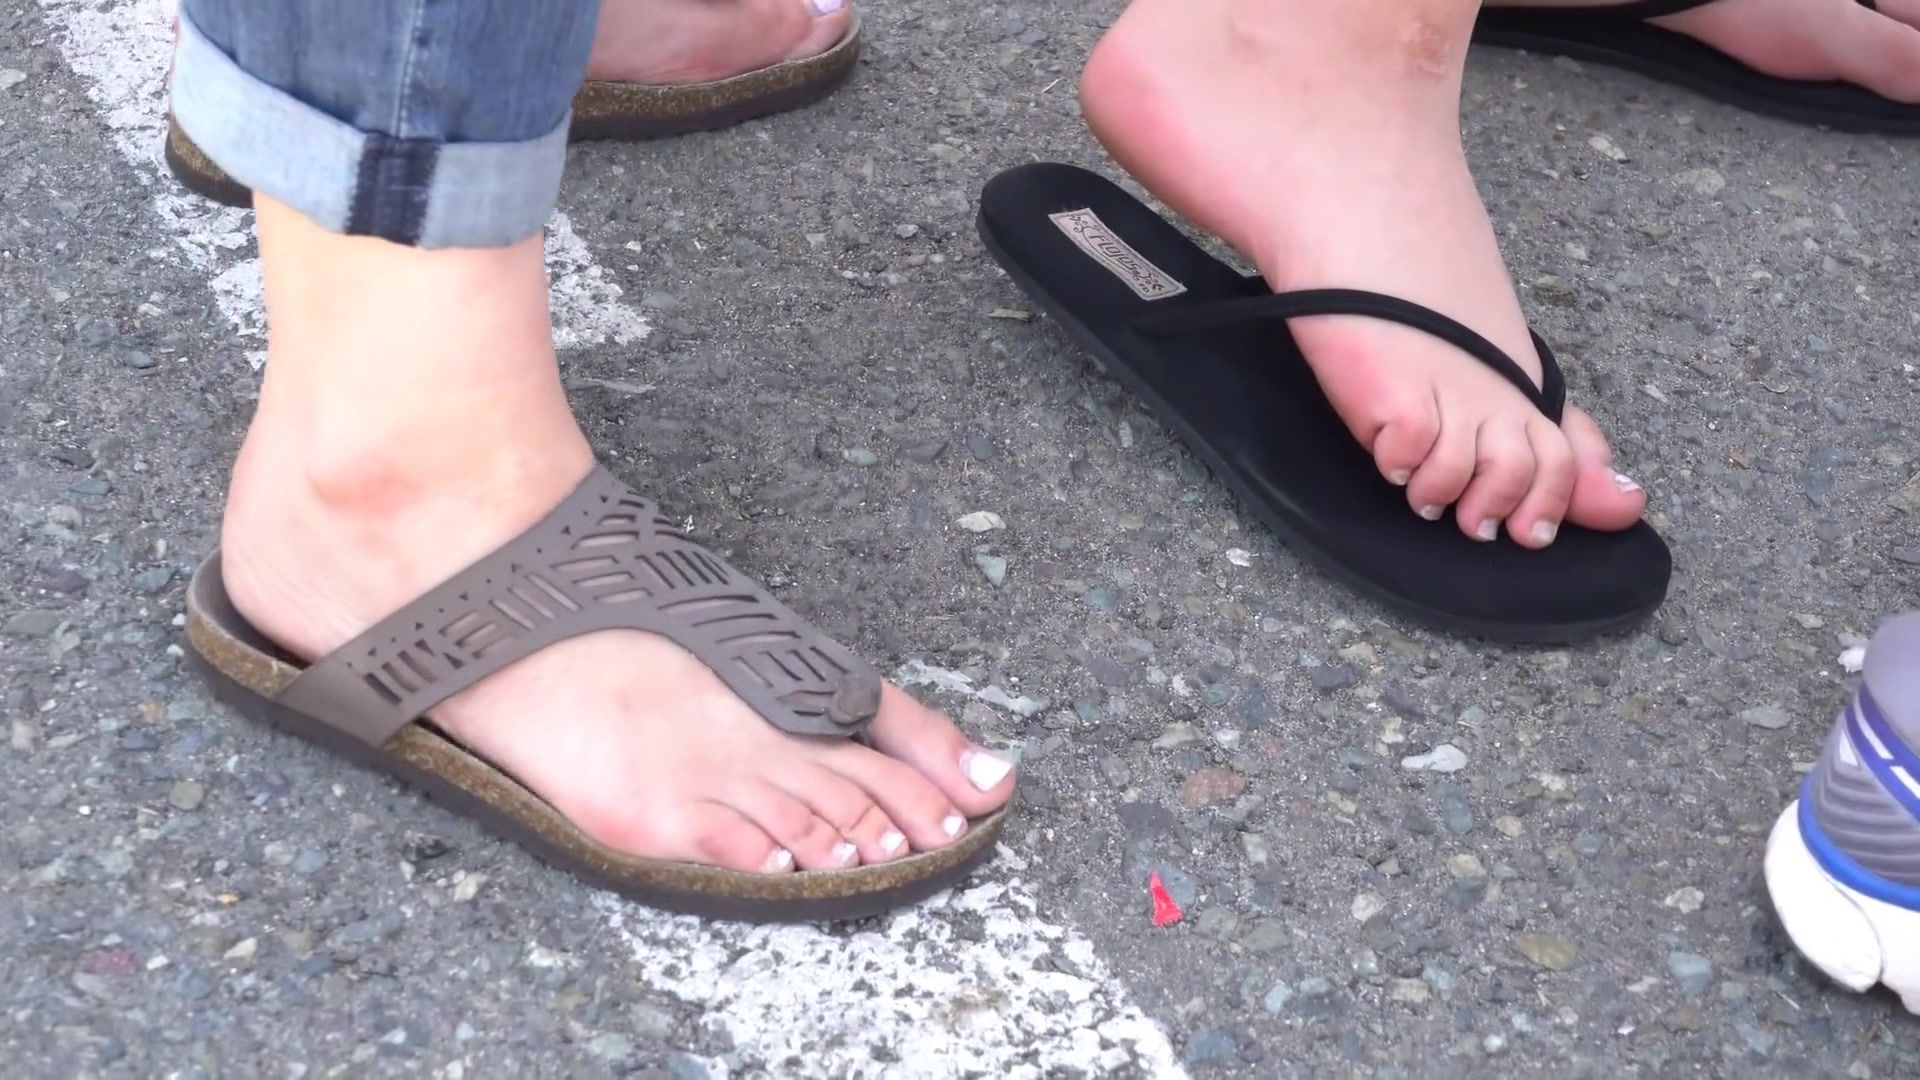 1080p Dirty Voyeur Filming Sexy Female Feet In Flip Flops In Public Roughsex